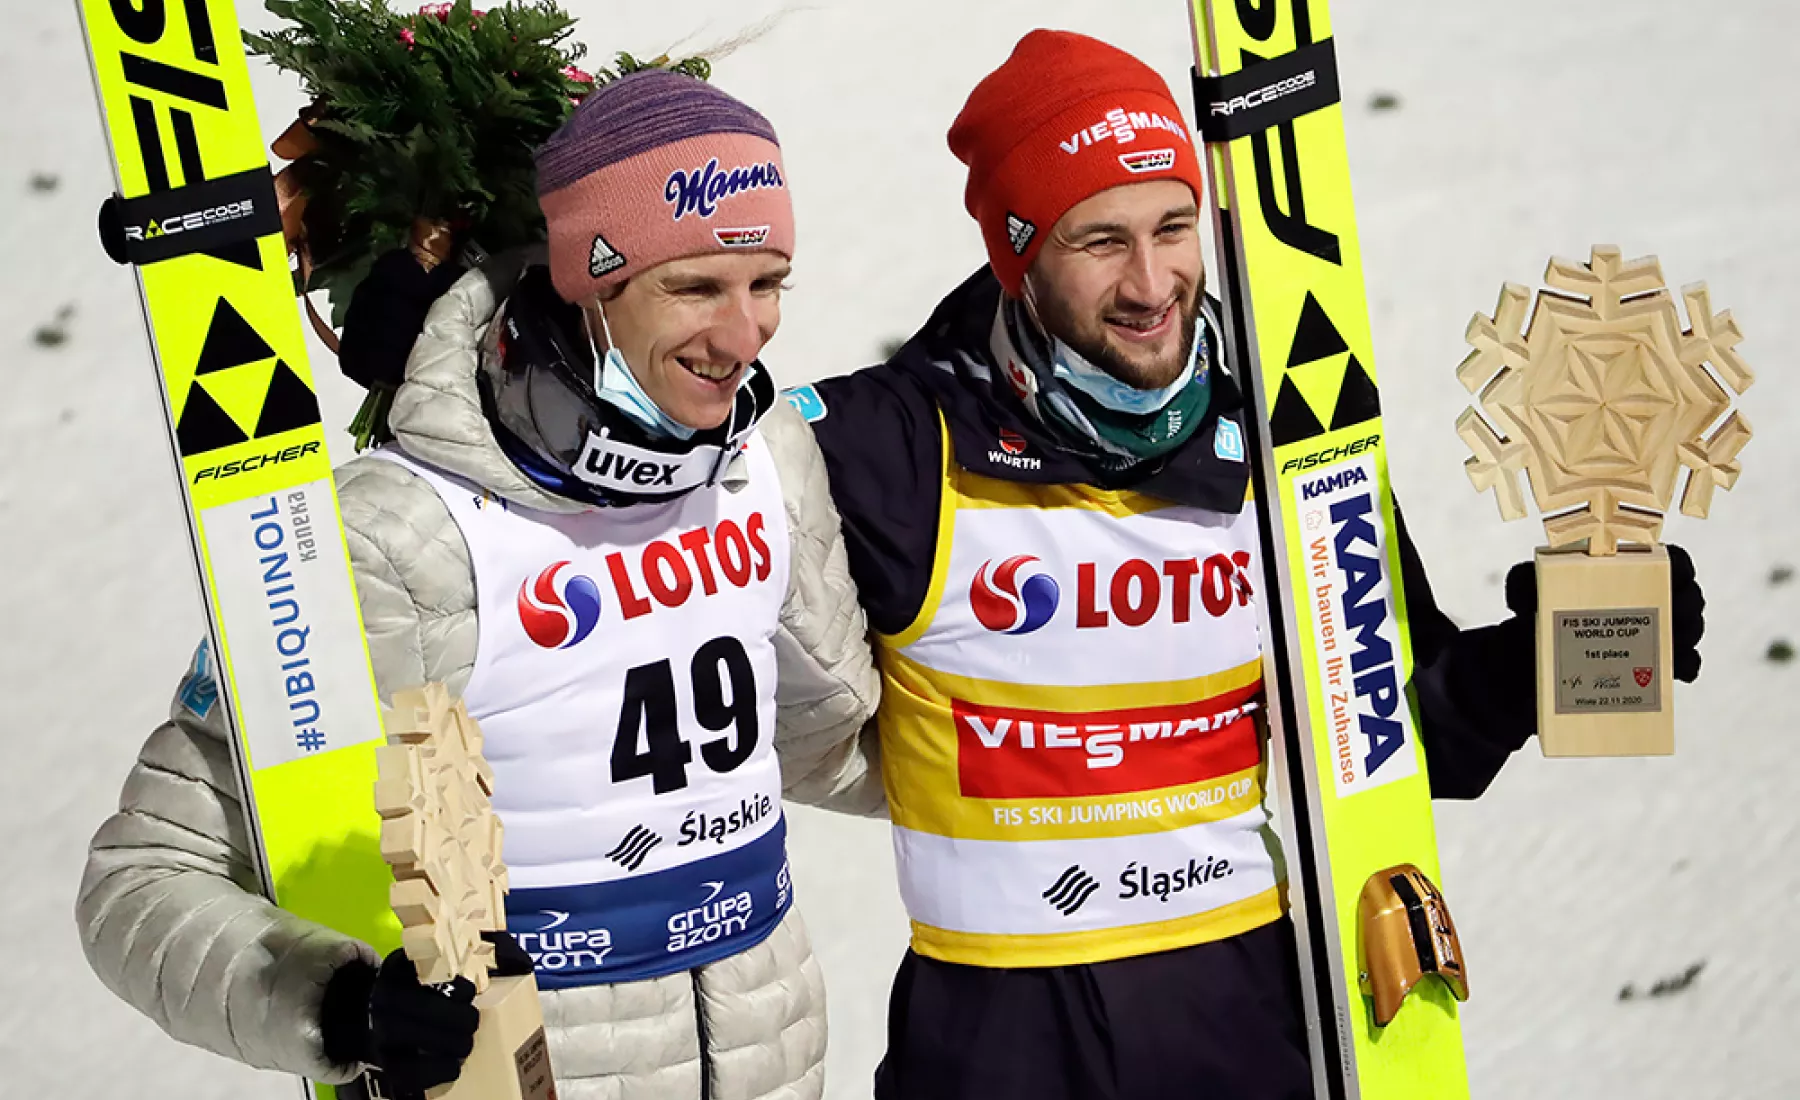 Skispringer Karl Geiger, Markus Eisenbichler